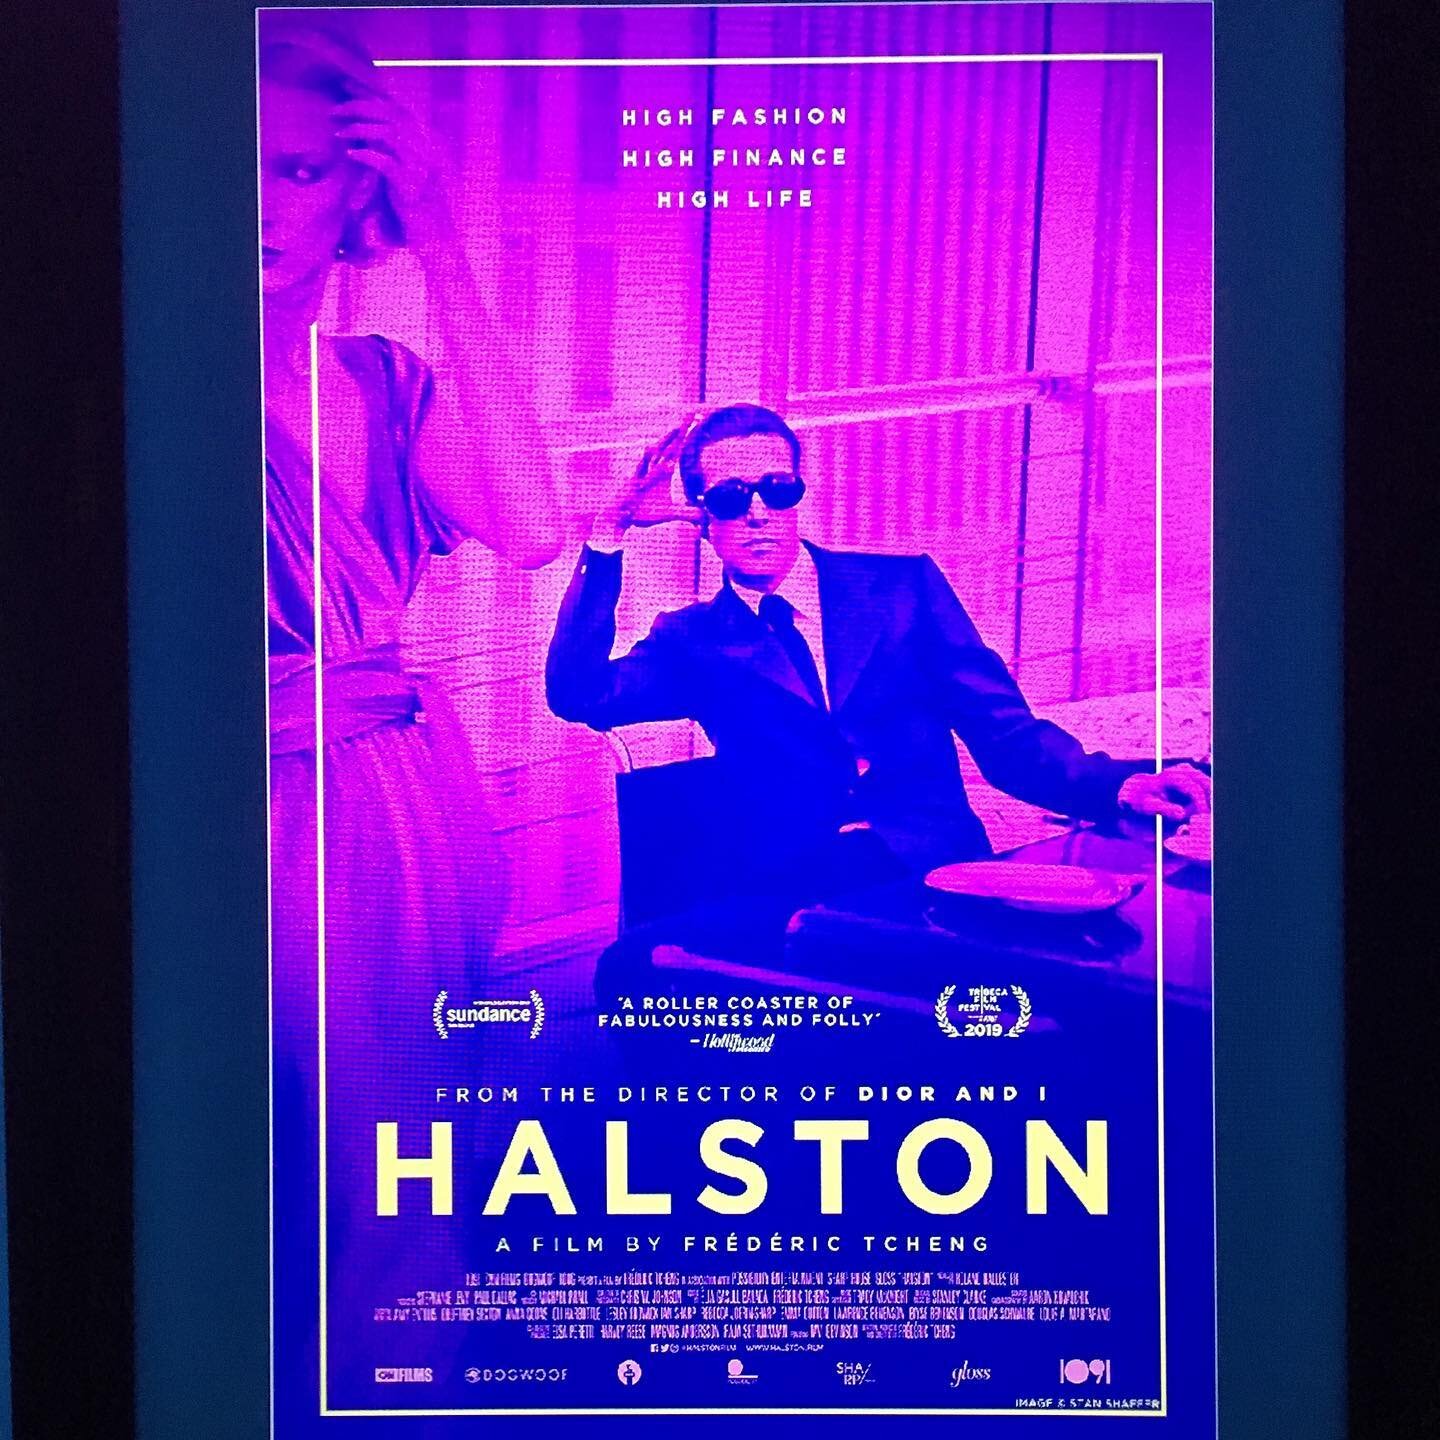 My matinee selection today: @halston. 🍿🎥👗 #HalstonFilm